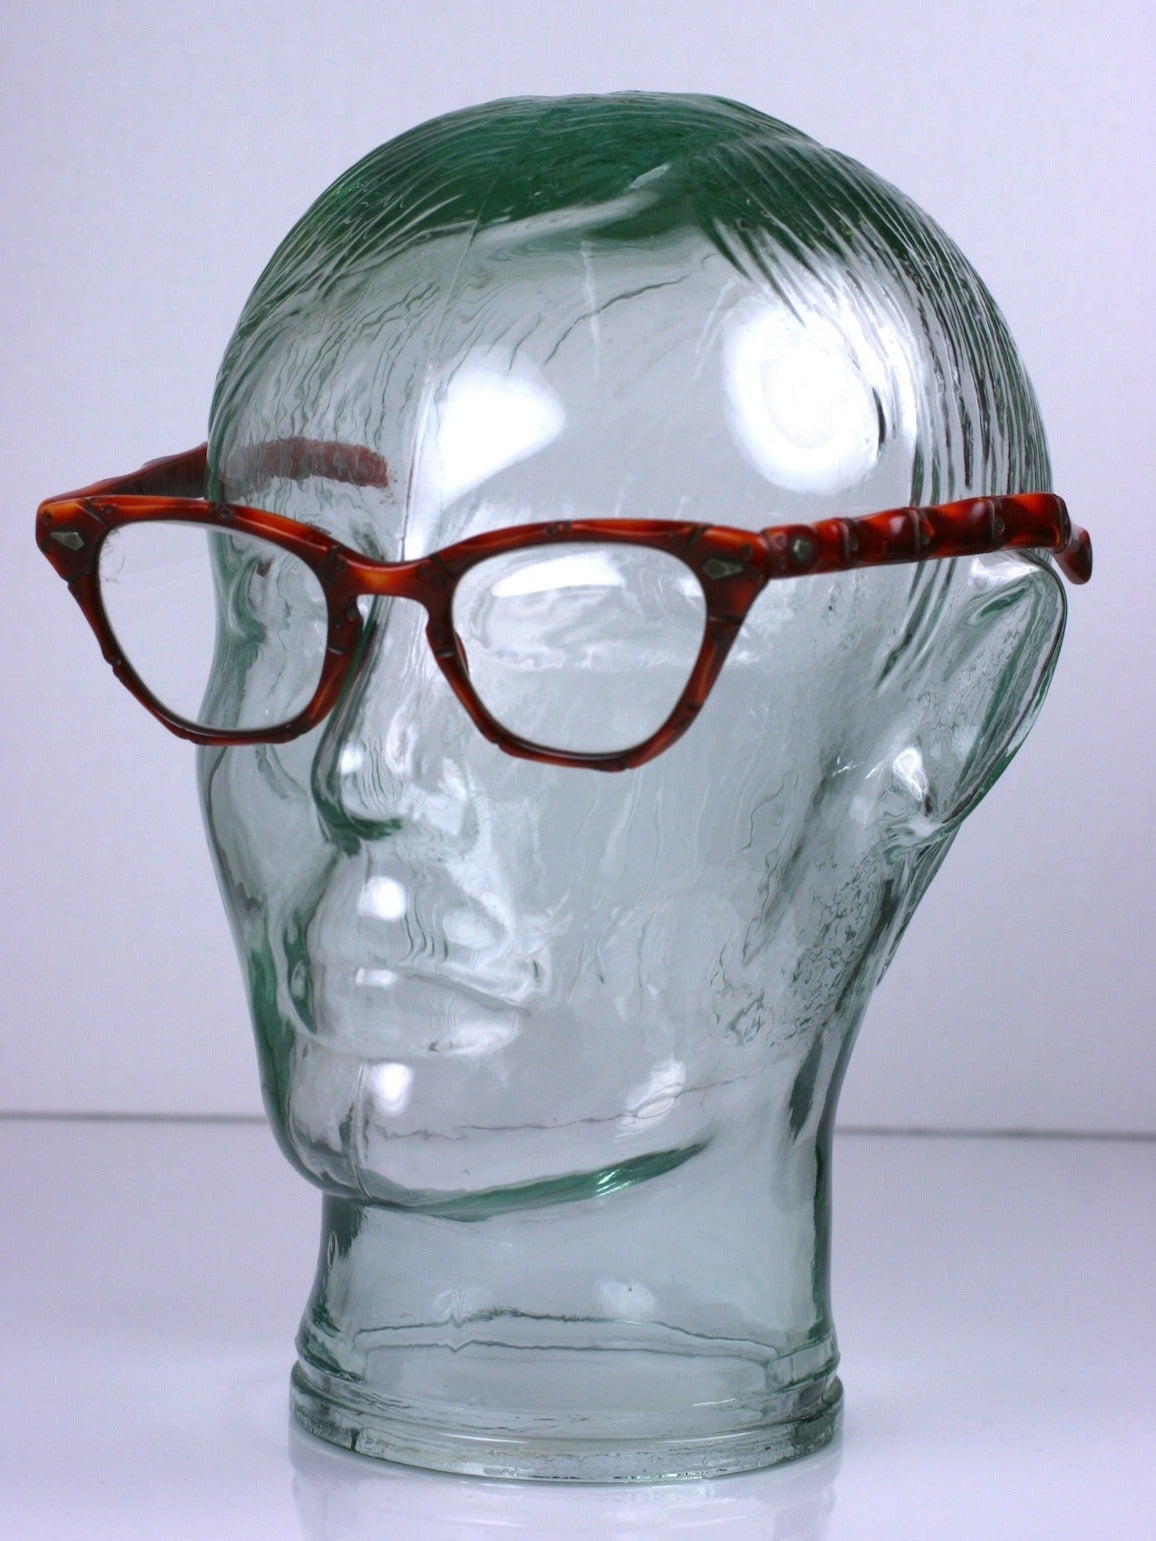 art deco style glasses